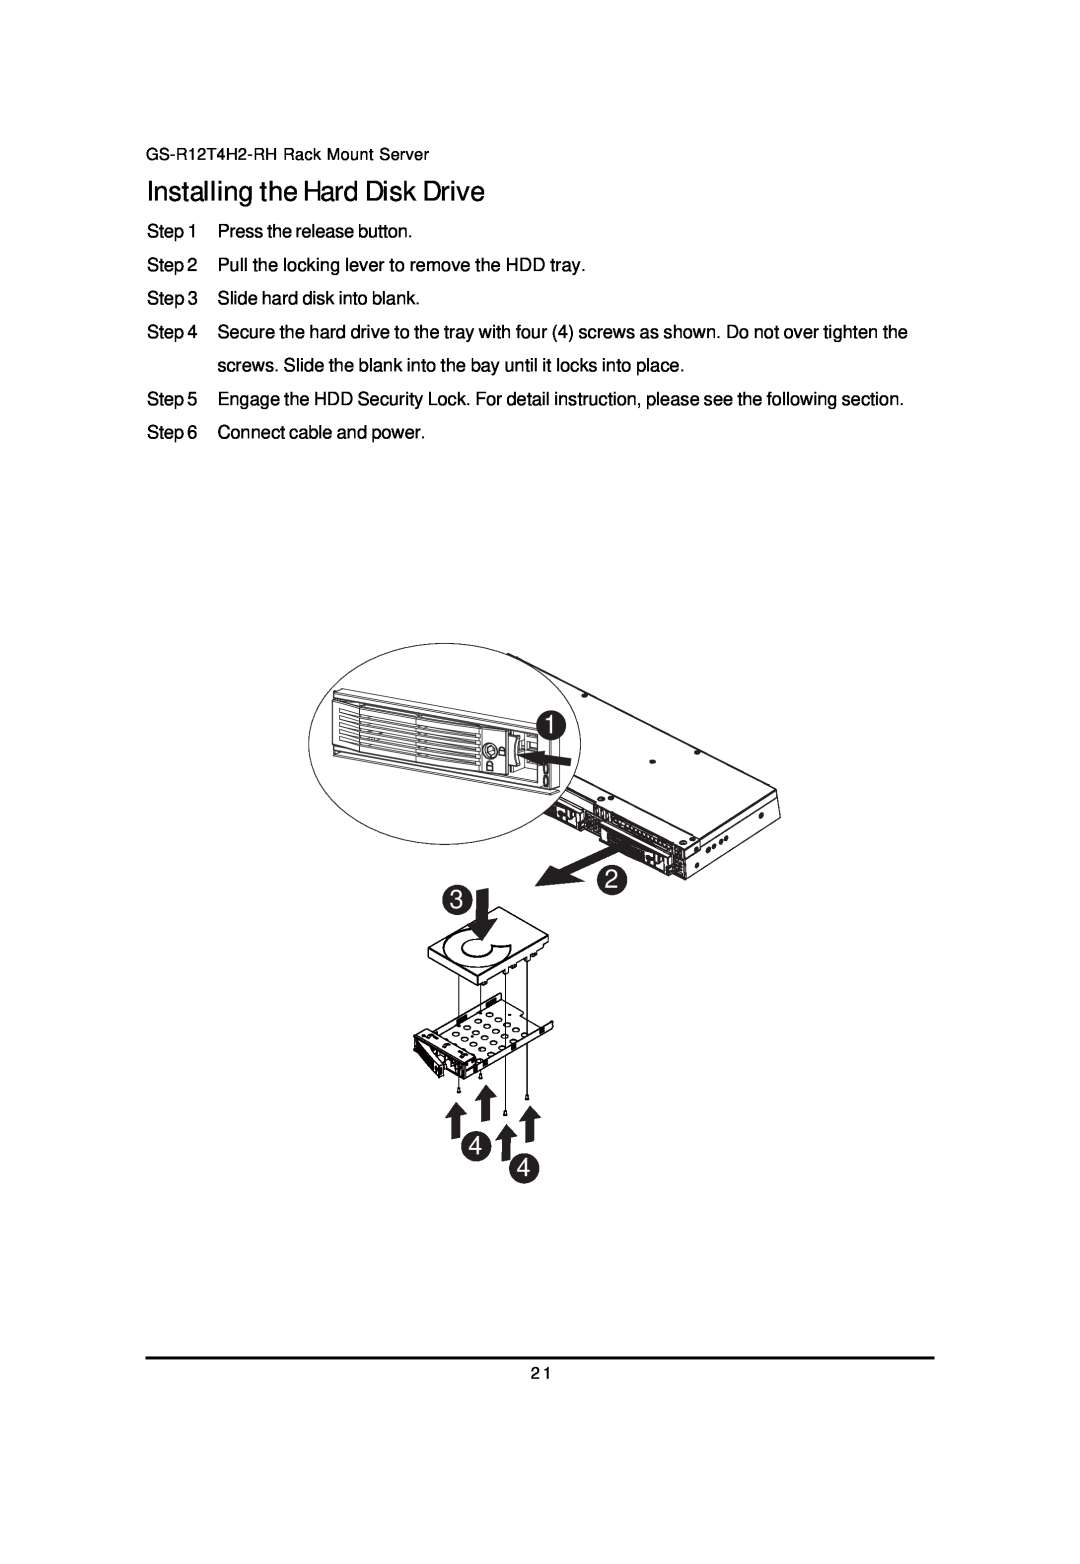 Gigabyte GS-R12T4H2-RH manual Installing the Hard Disk Drive 